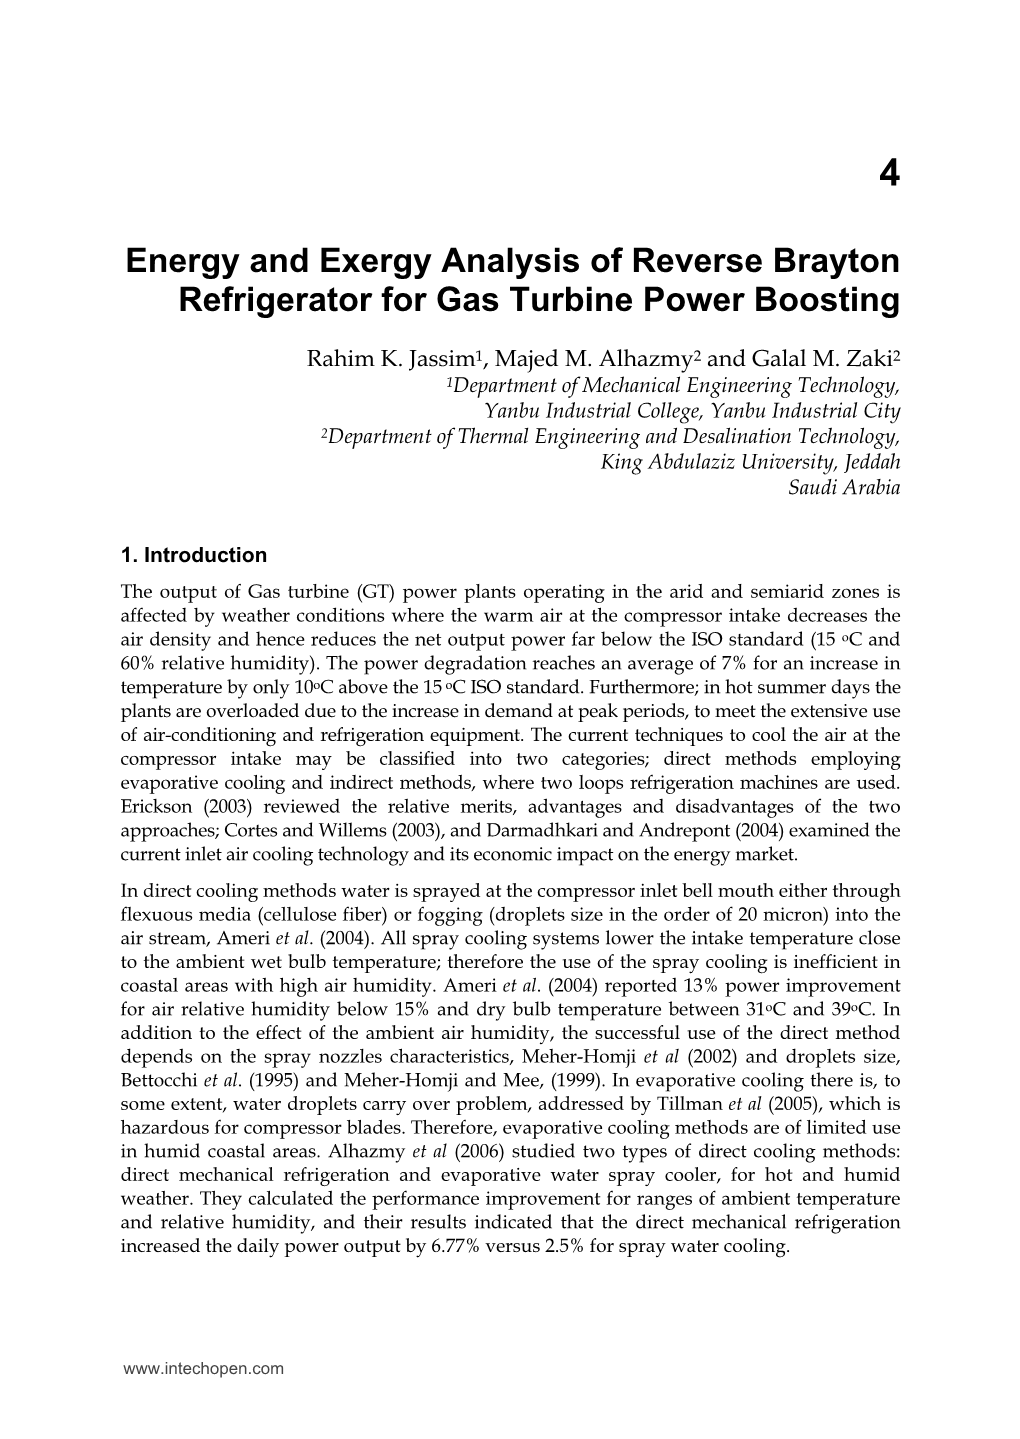 Energy and Exergy Analysis of Reverse Brayton Refrigerator for Gas Turbine Power Boosting